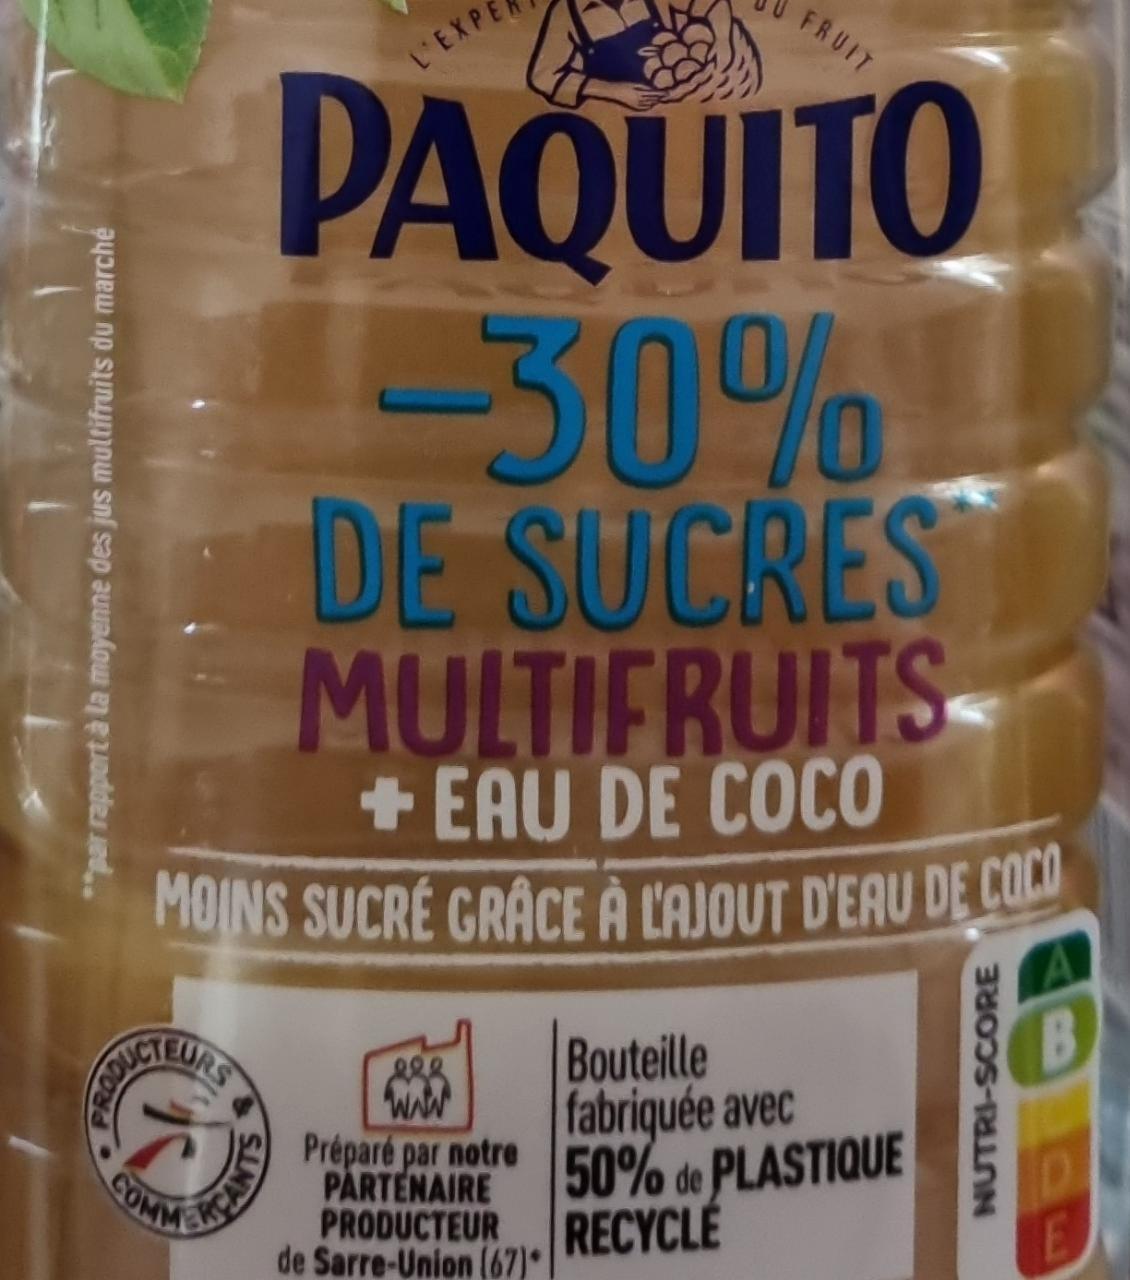 Fotografie - Multifruits + eau de coco -30% de suckres Paquito